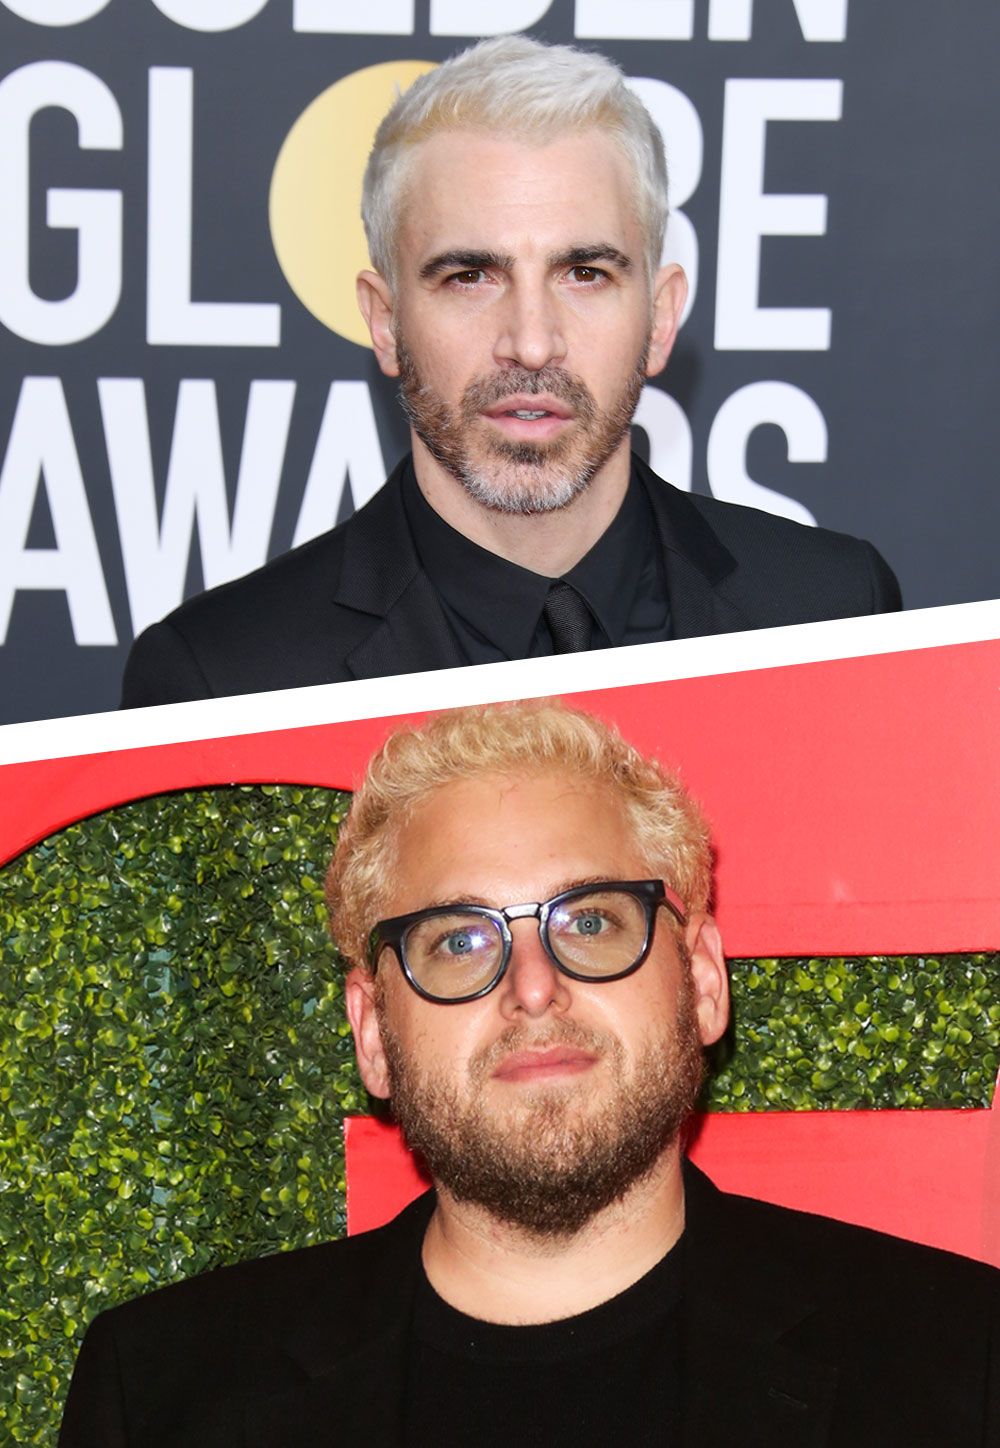 Platinum Blond Hair Is Trending For Men In Hollywood